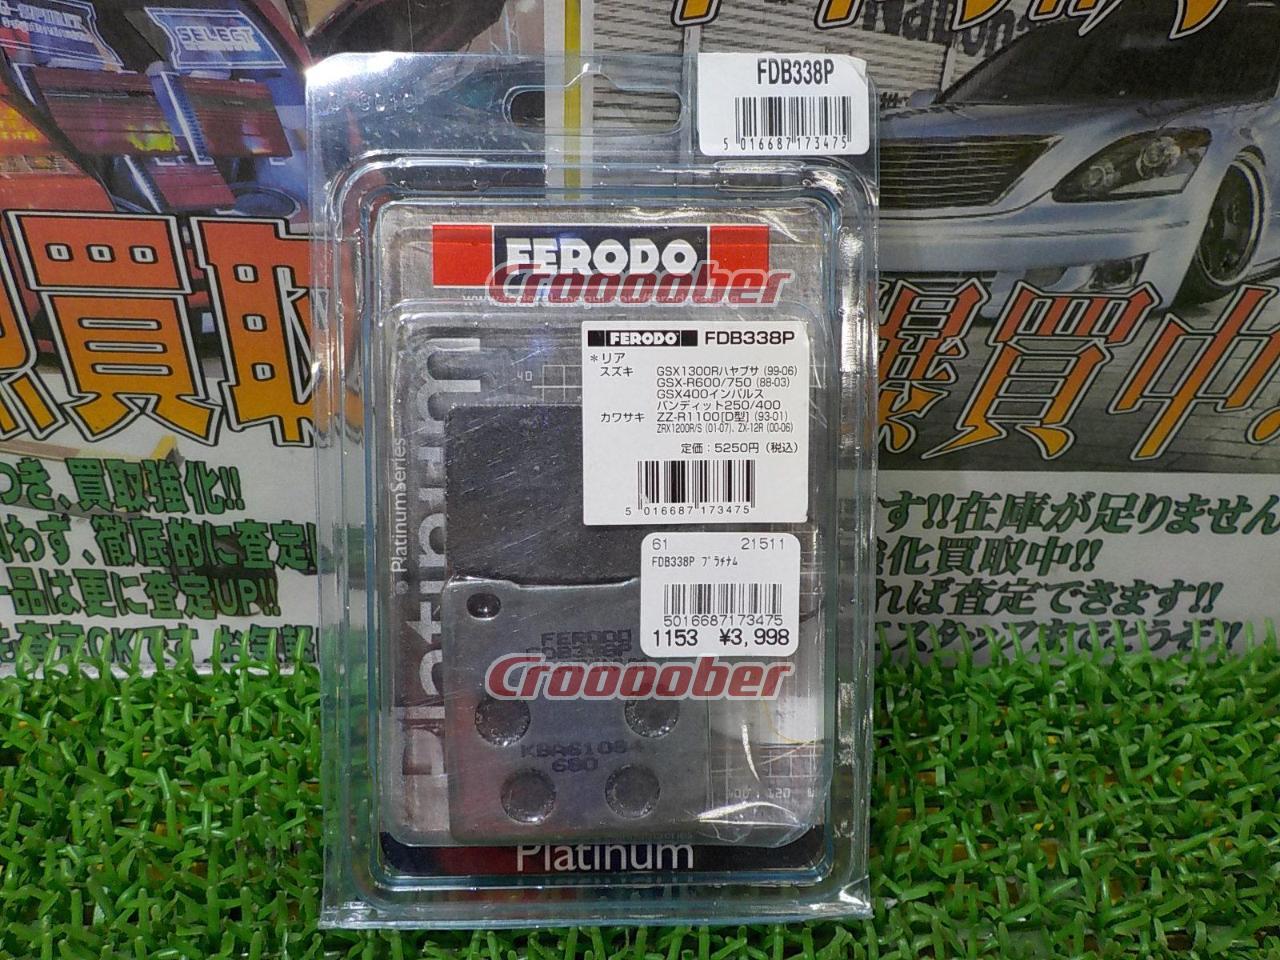 GSX1300R / Hayabusa] Ferodo Platinum Brake Pads / FDB338P [Made In 